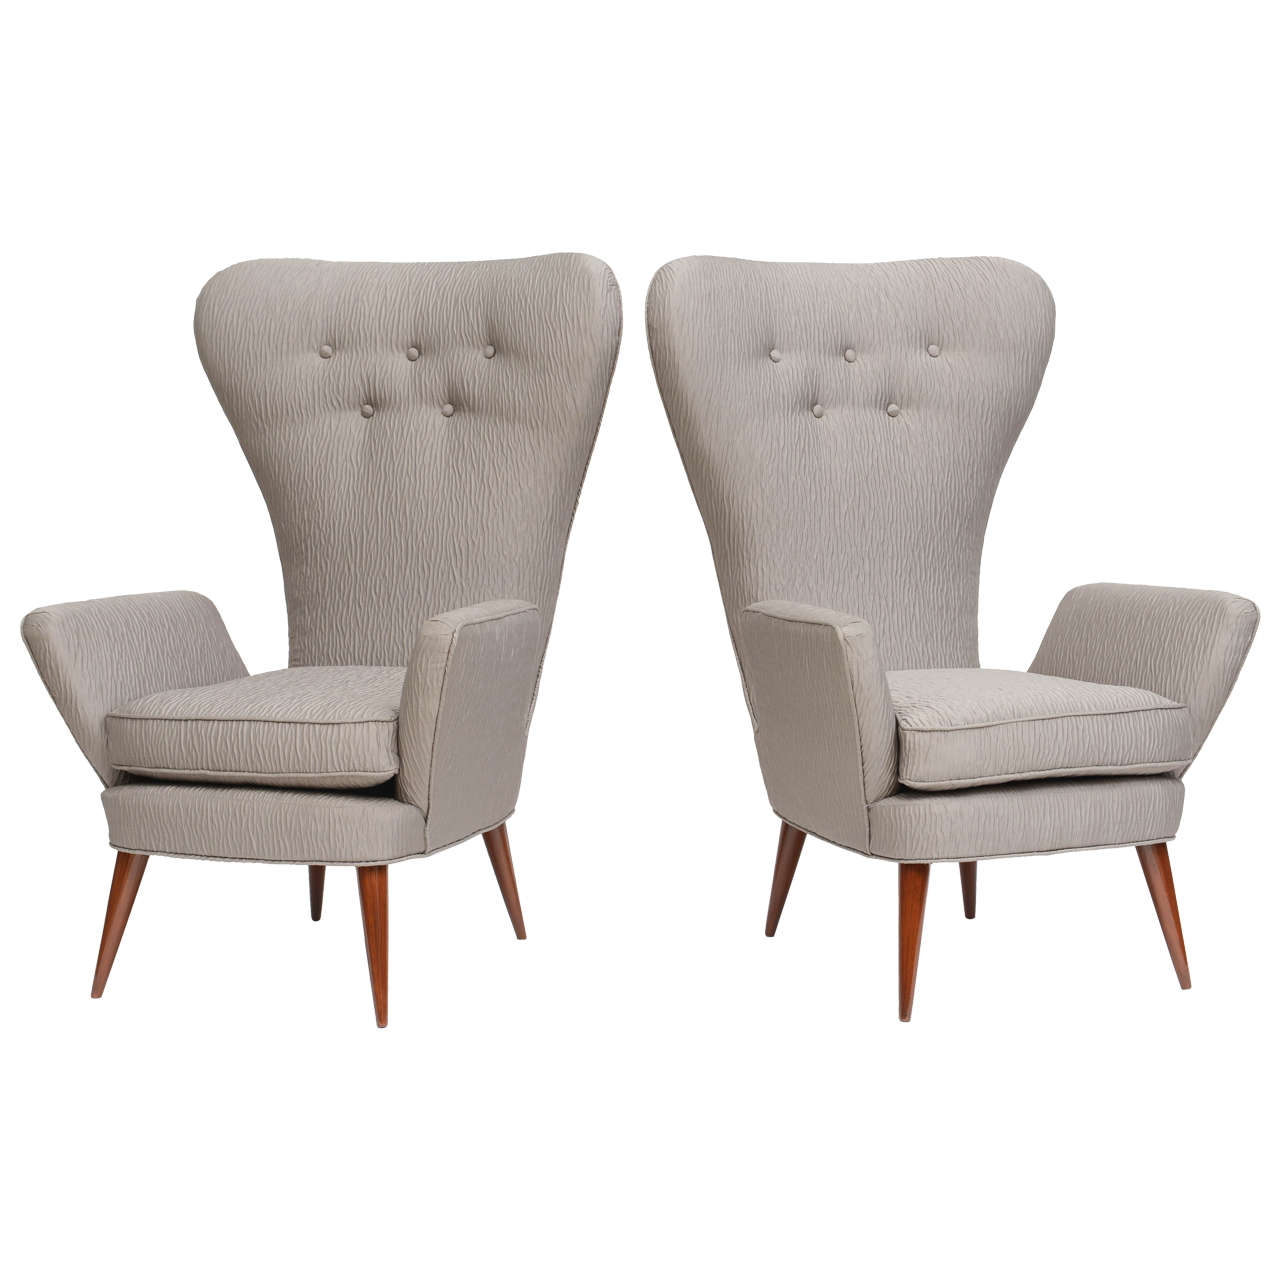 Pair Of Italian Modern High Back Chairs